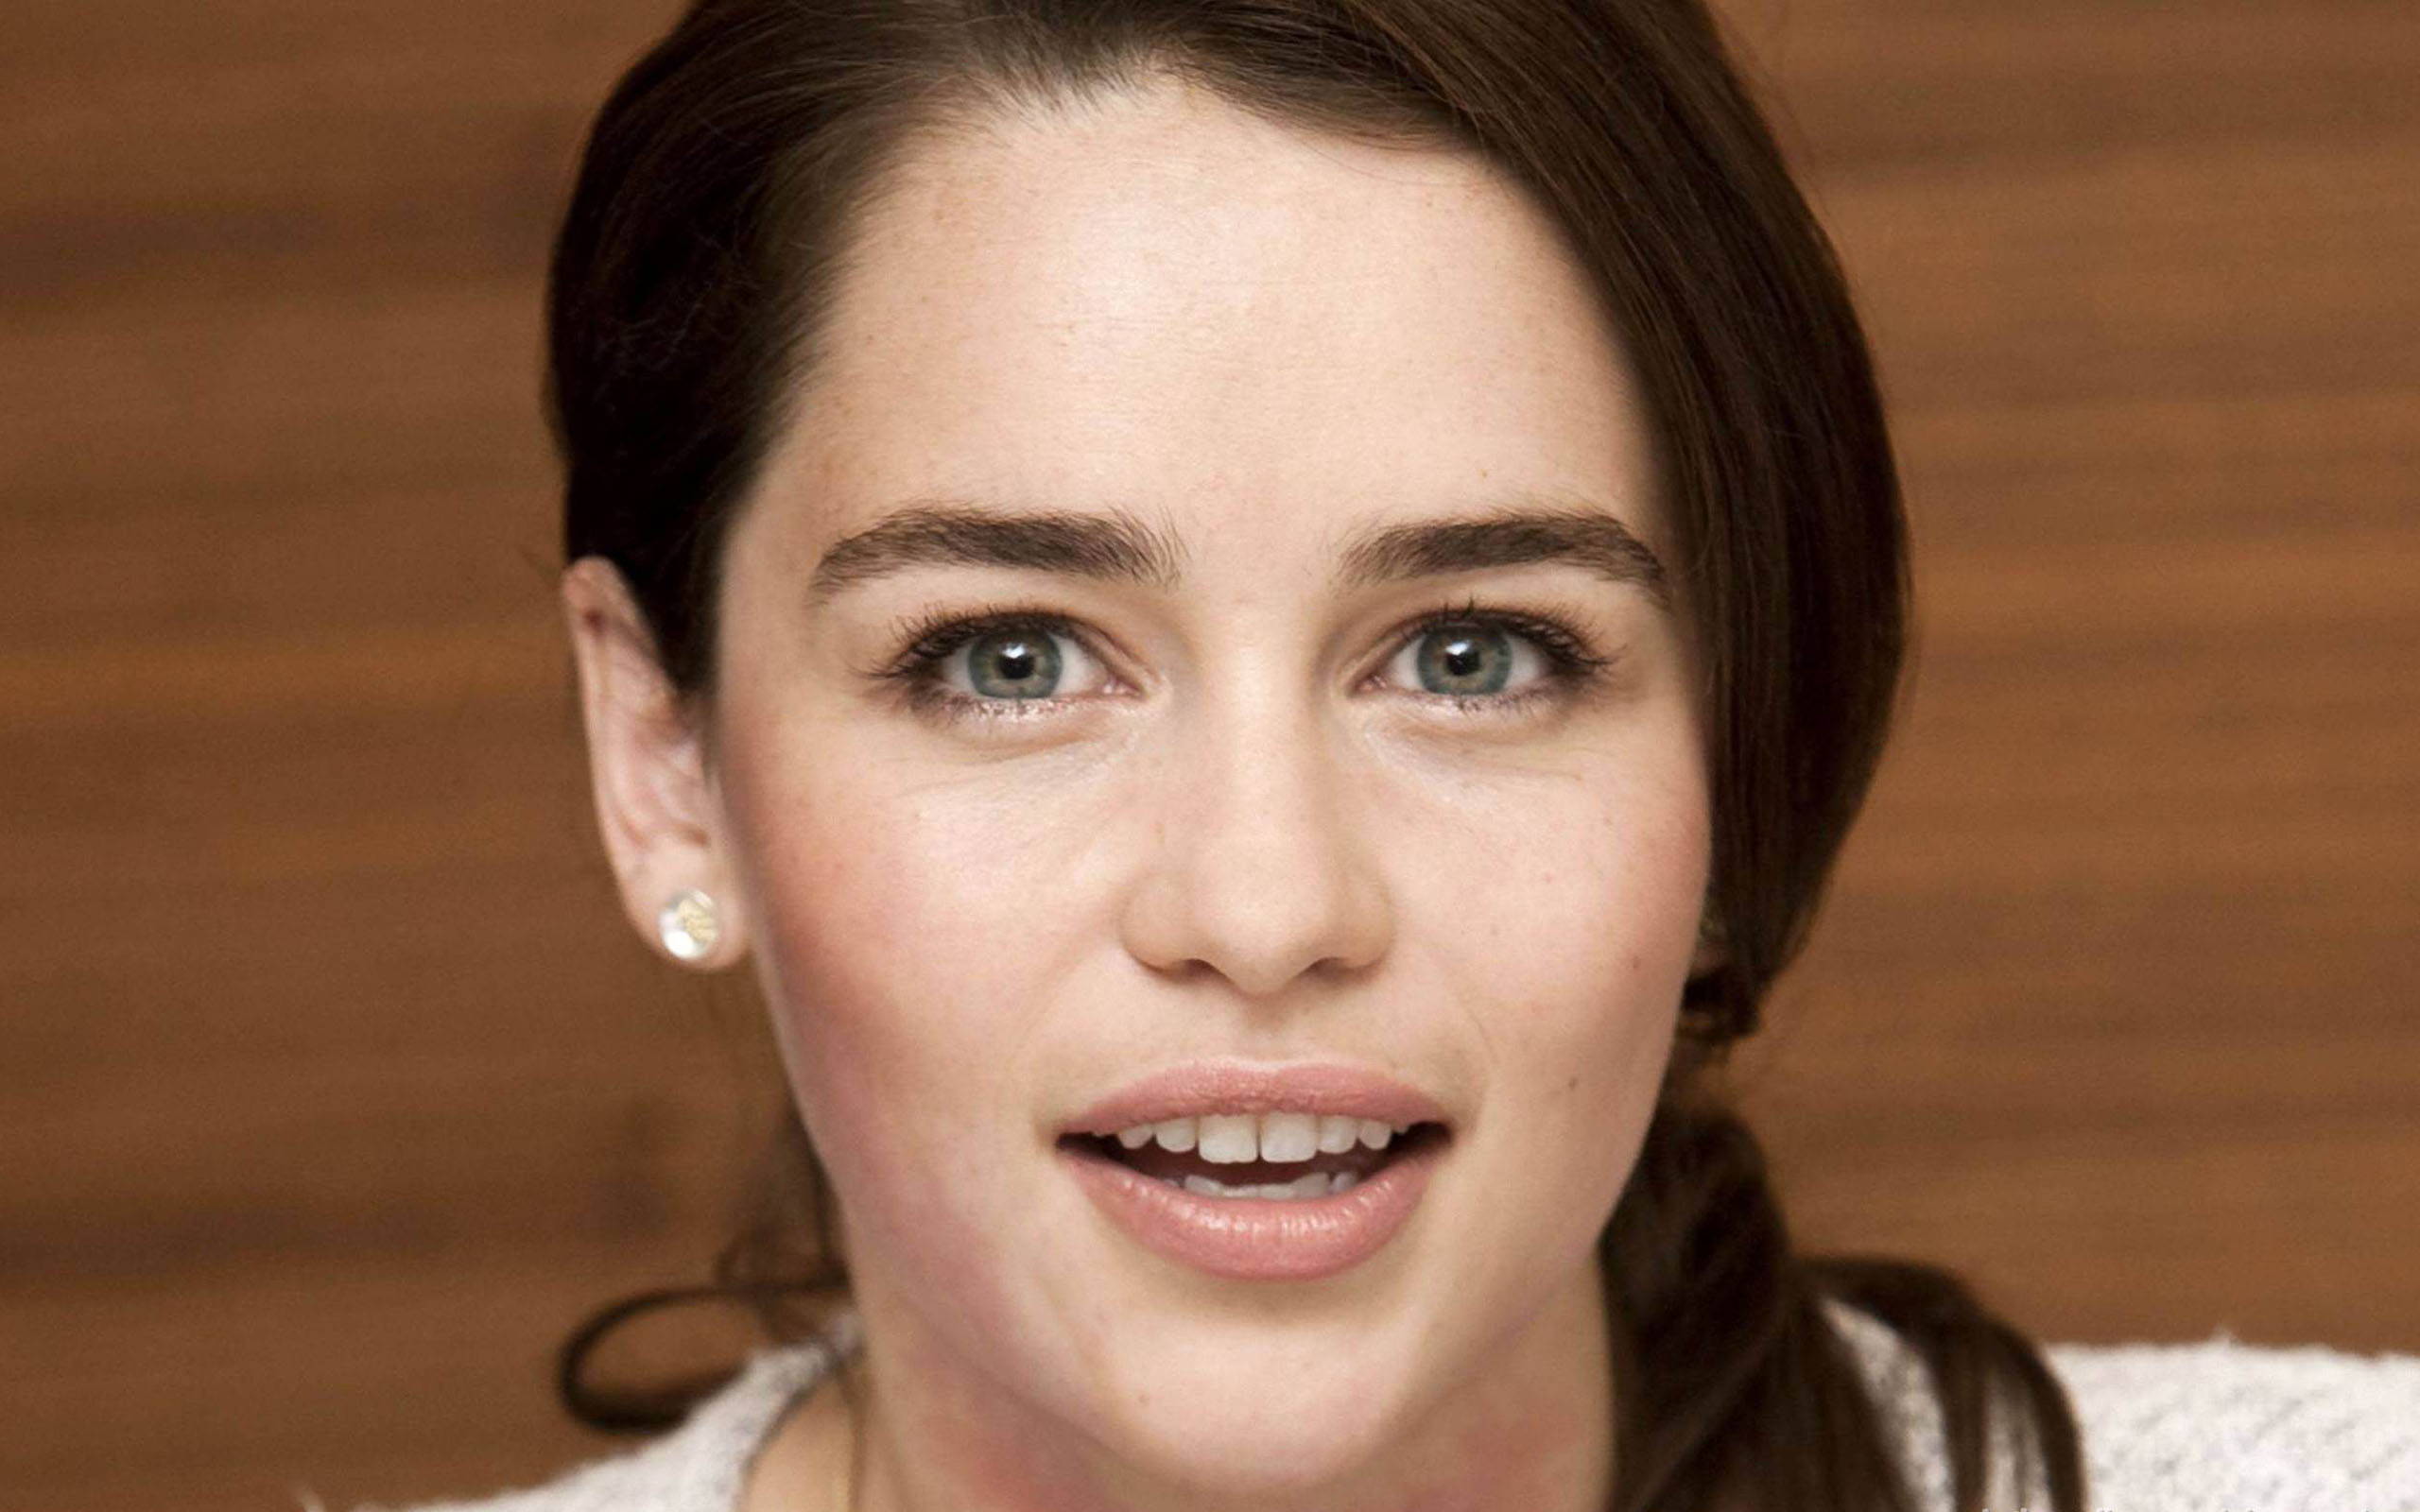 Emilia Clarke Cute Face Portrait Wallpapers